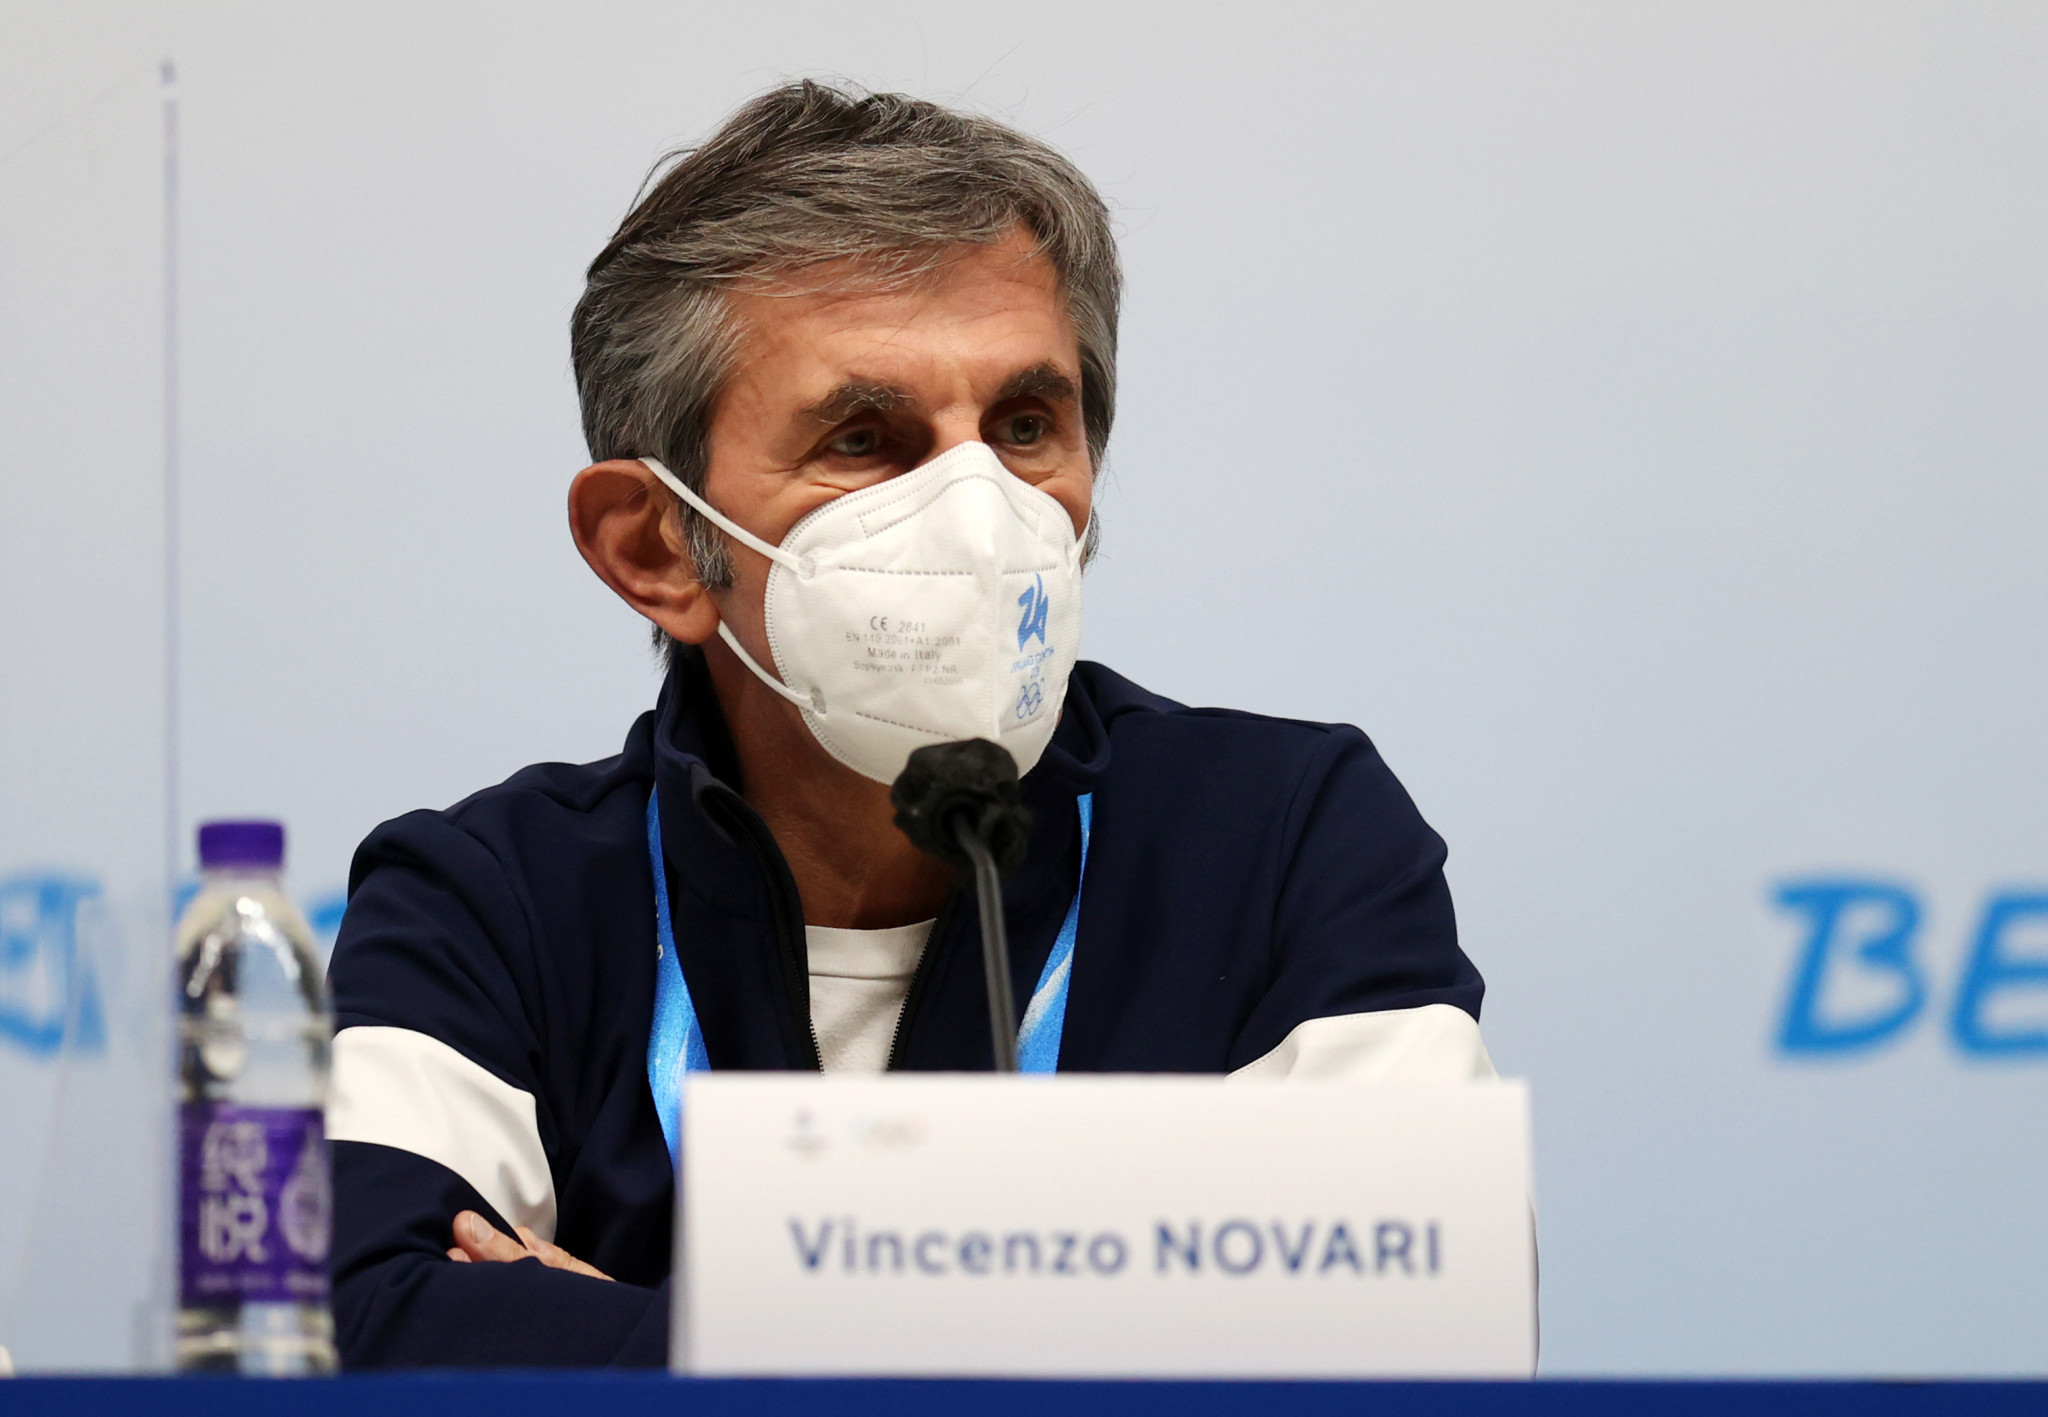 Milan Cortina 2026 chief executive Vincenzo Novari hopes to announce 